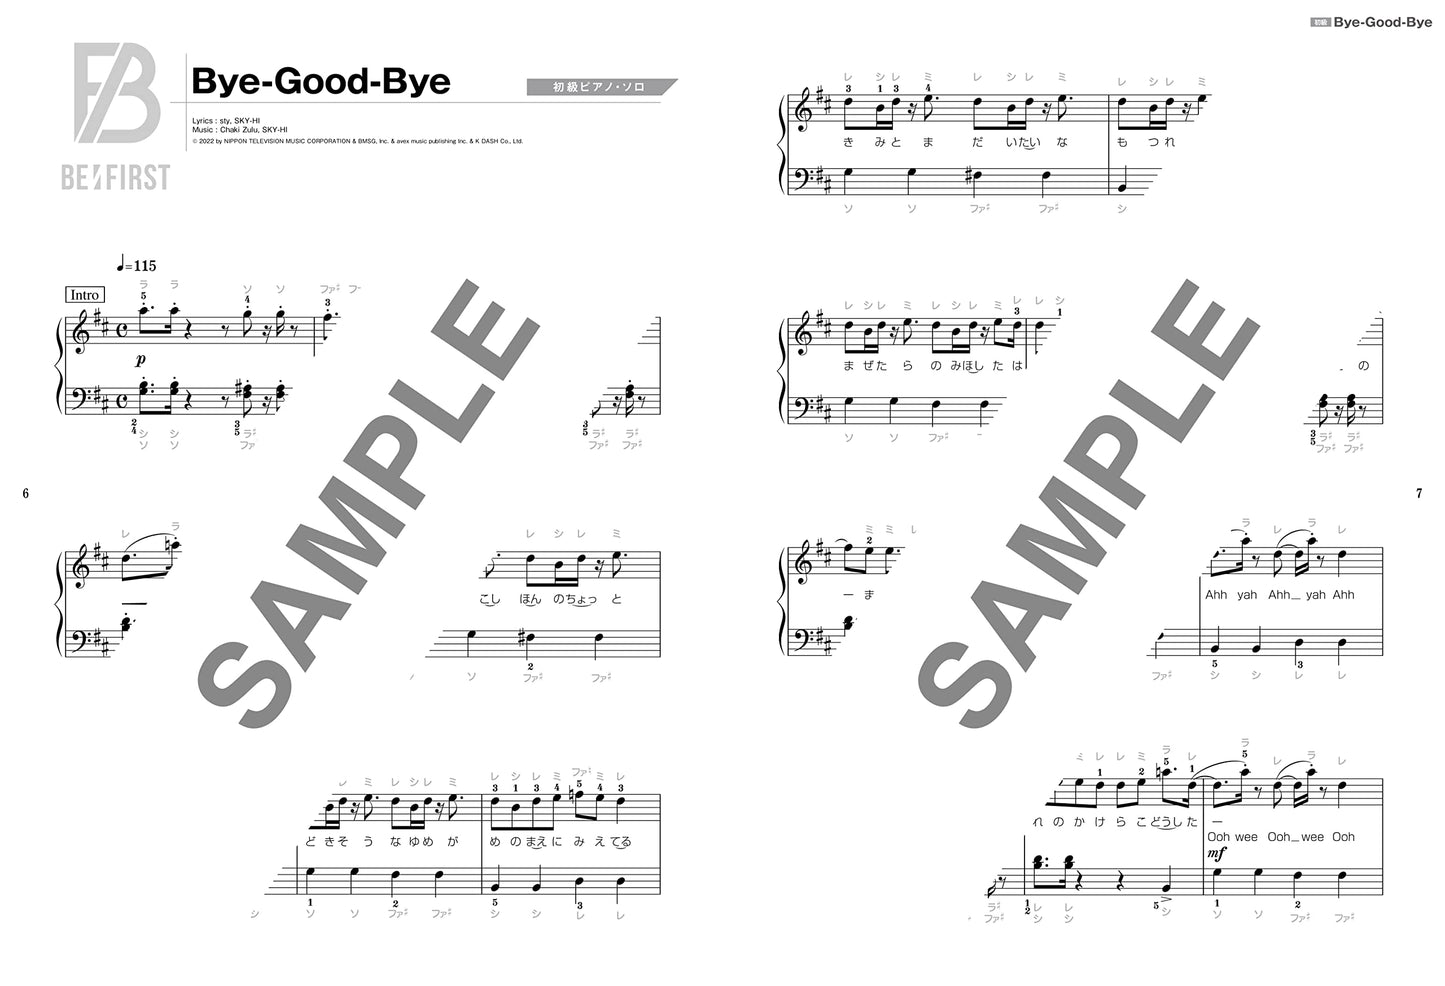 BE: FIRST "Bye-Good-Bye" Piano Solo(Pre-Intermediate) Sheet Music Book